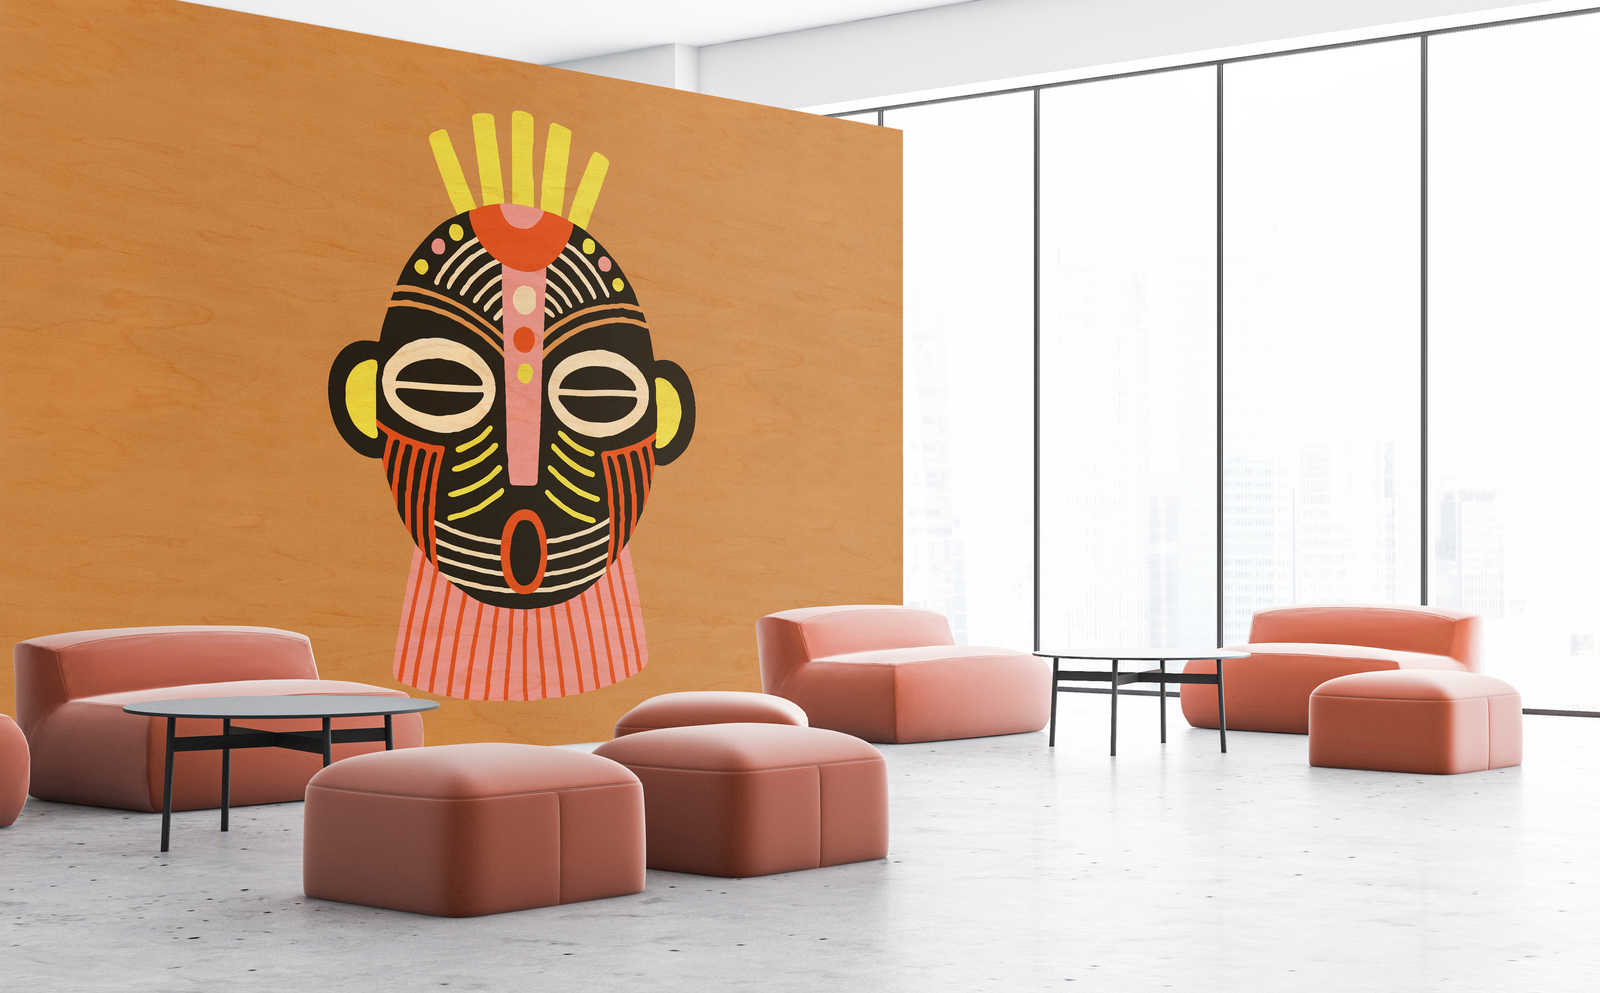             Overseas 4 – Fototapete Afrika Design Inspiration Maske
        